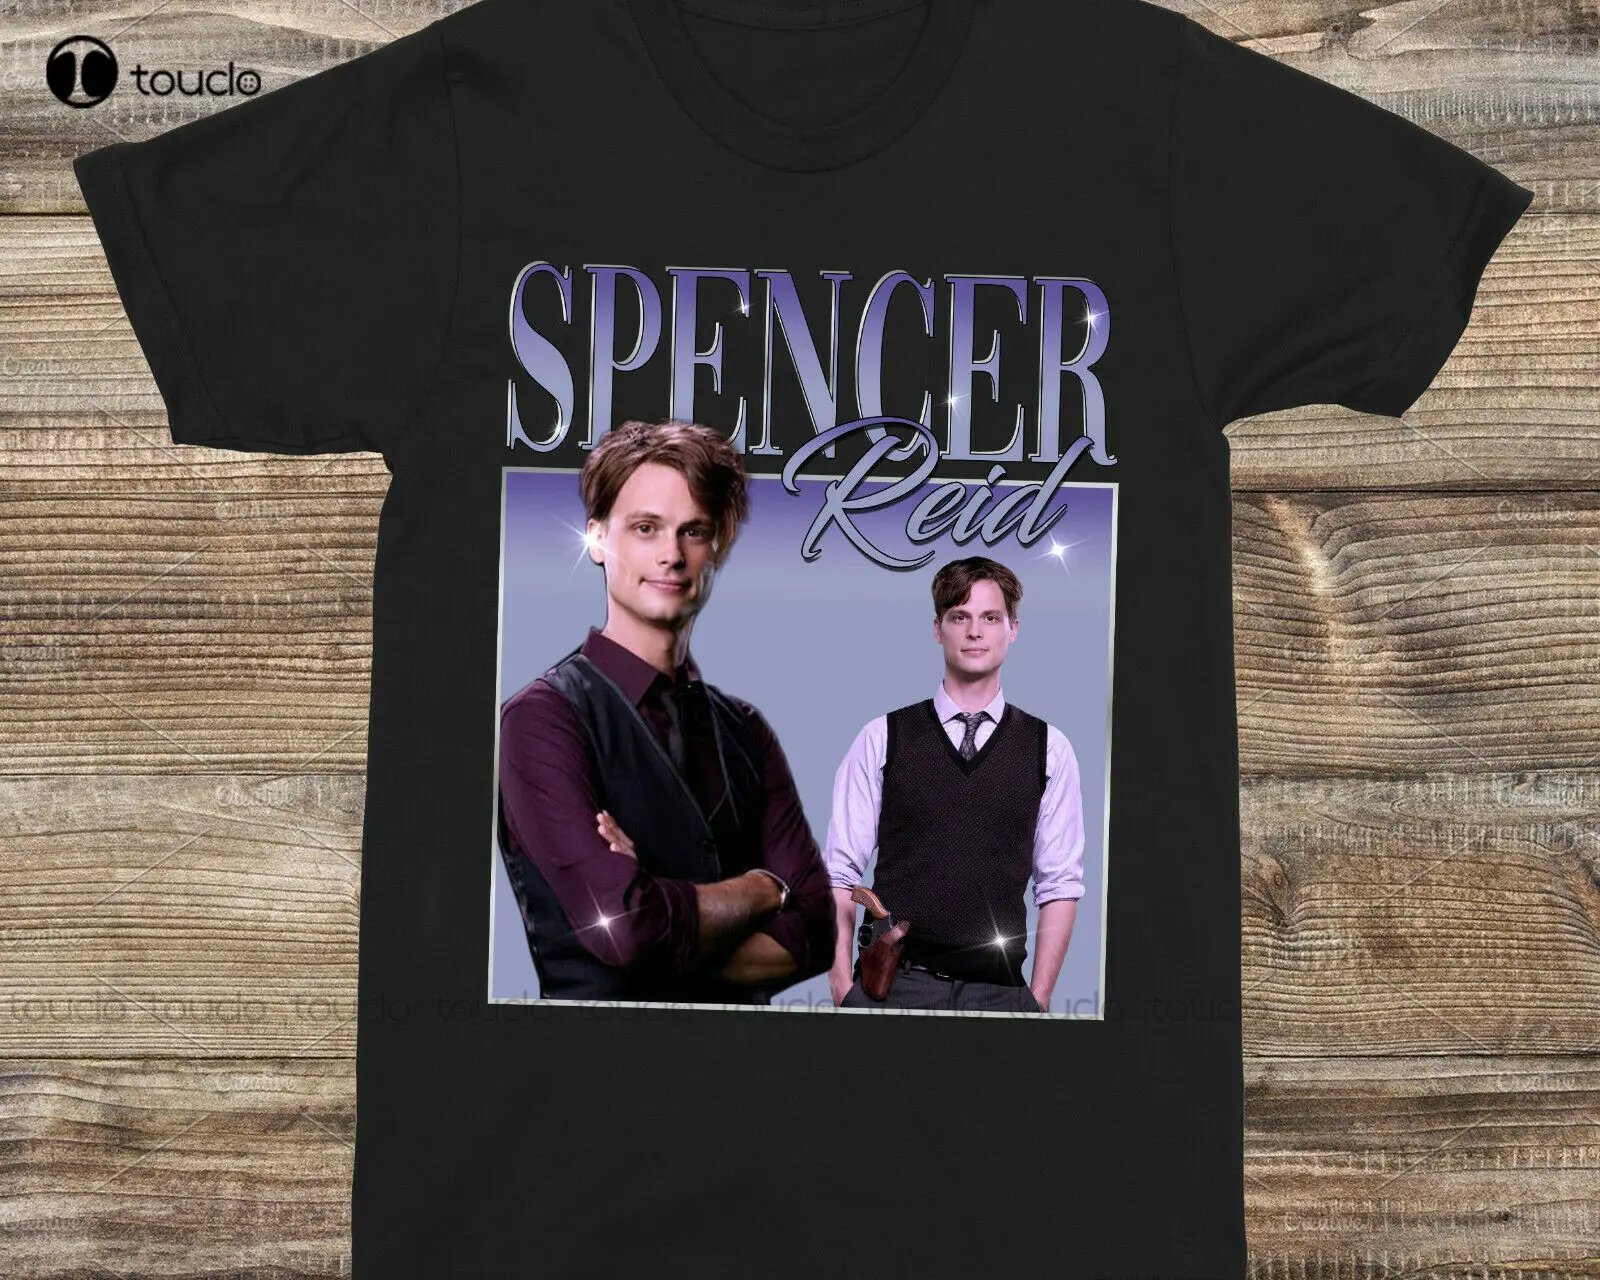 

Spencer Reid Criminal Minds Matthew Gray Gubler 90S Vintage T-Shirt T Shirts For Men Cotton Tee Shirts Xs-5Xl Streetwear Tshirt